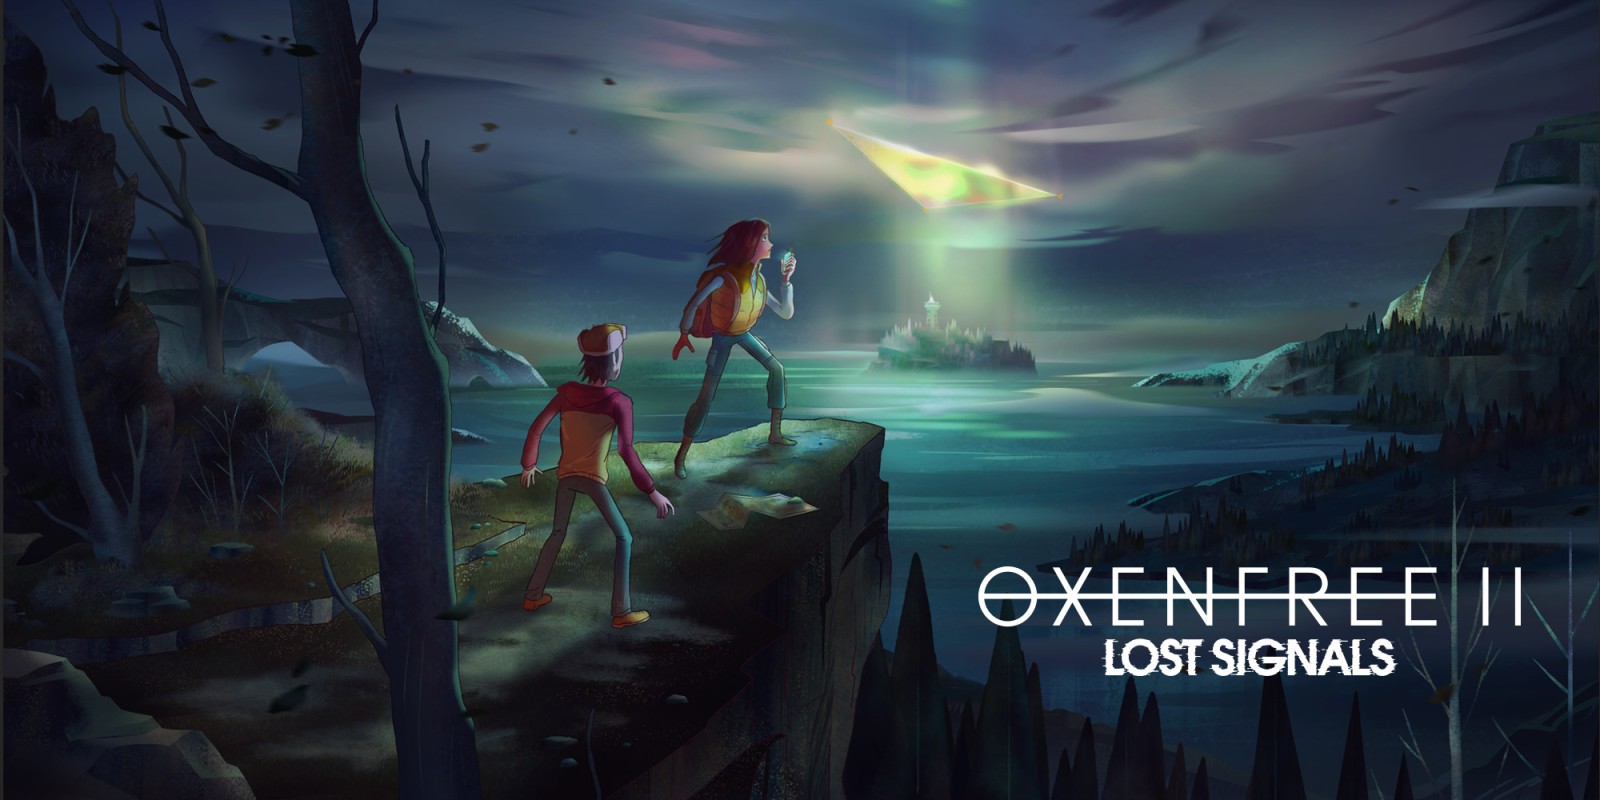 jaquette du jeu vidéo Oxenfree II: Lost Signals